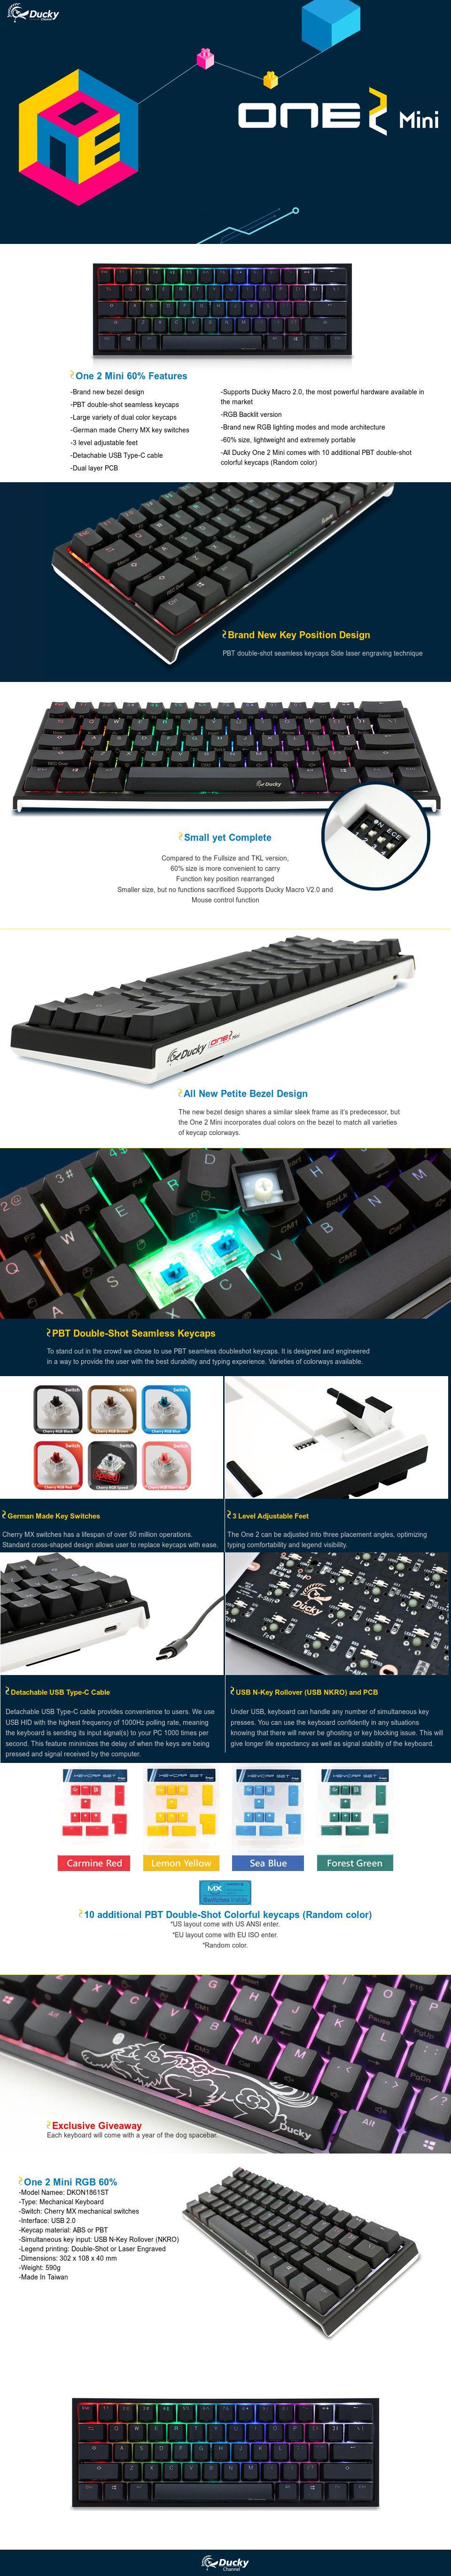 Ducky One 2 Mini RGB Mechanical Keyboard with Cherry MX Brown Key Switches